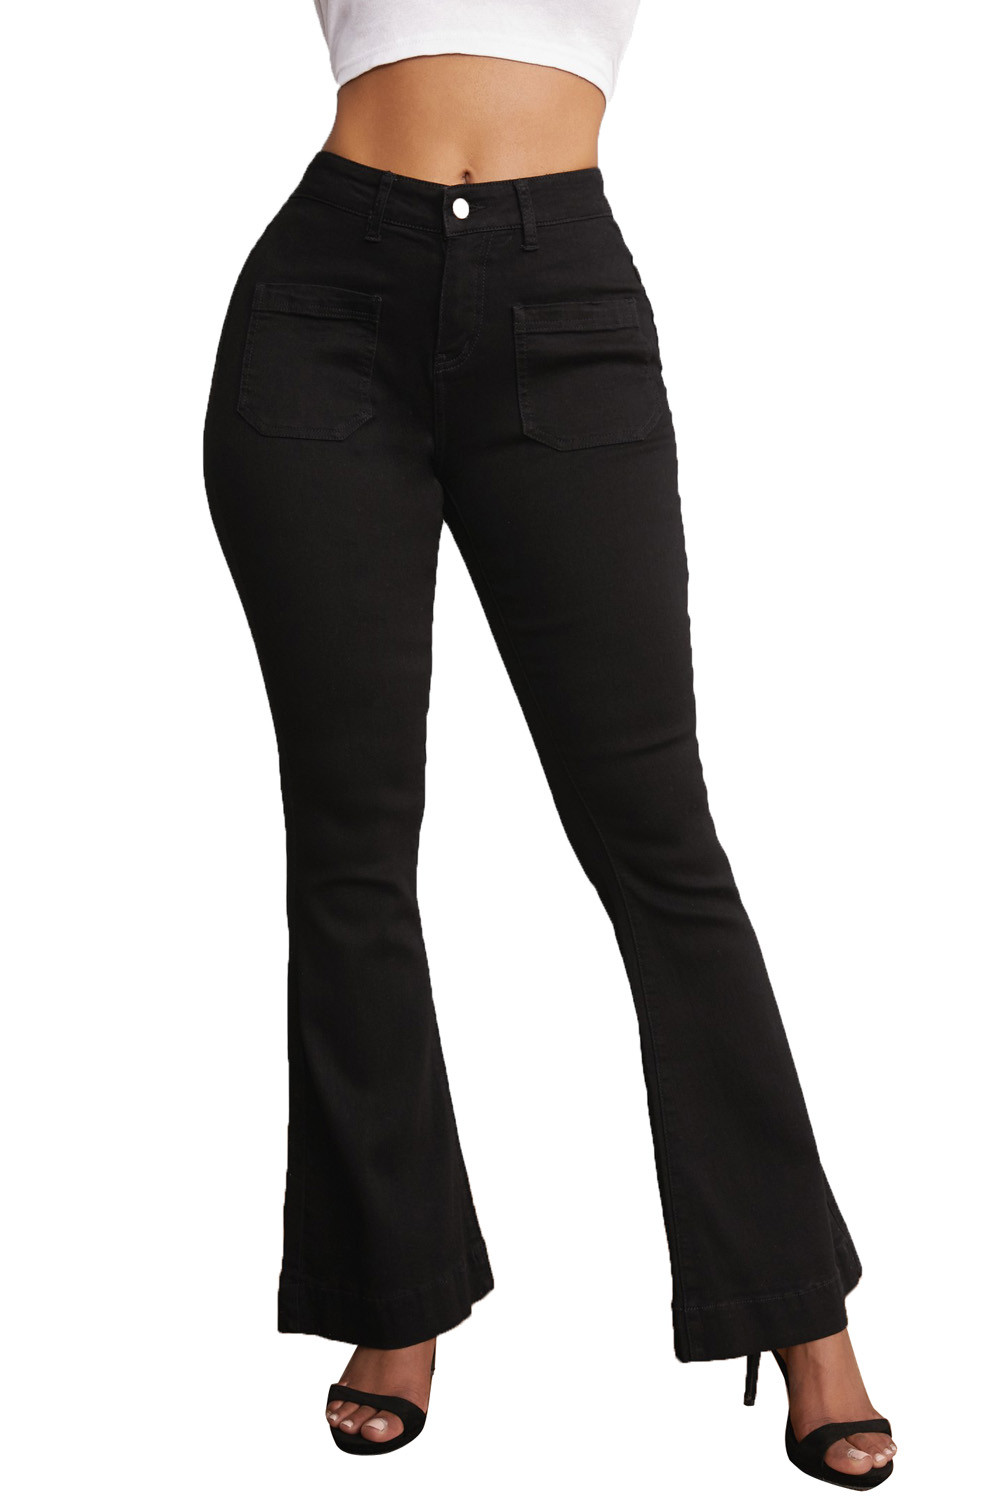 US$ 17.25 Black Vintage Casual Pocket Flared Jeans Wholesale